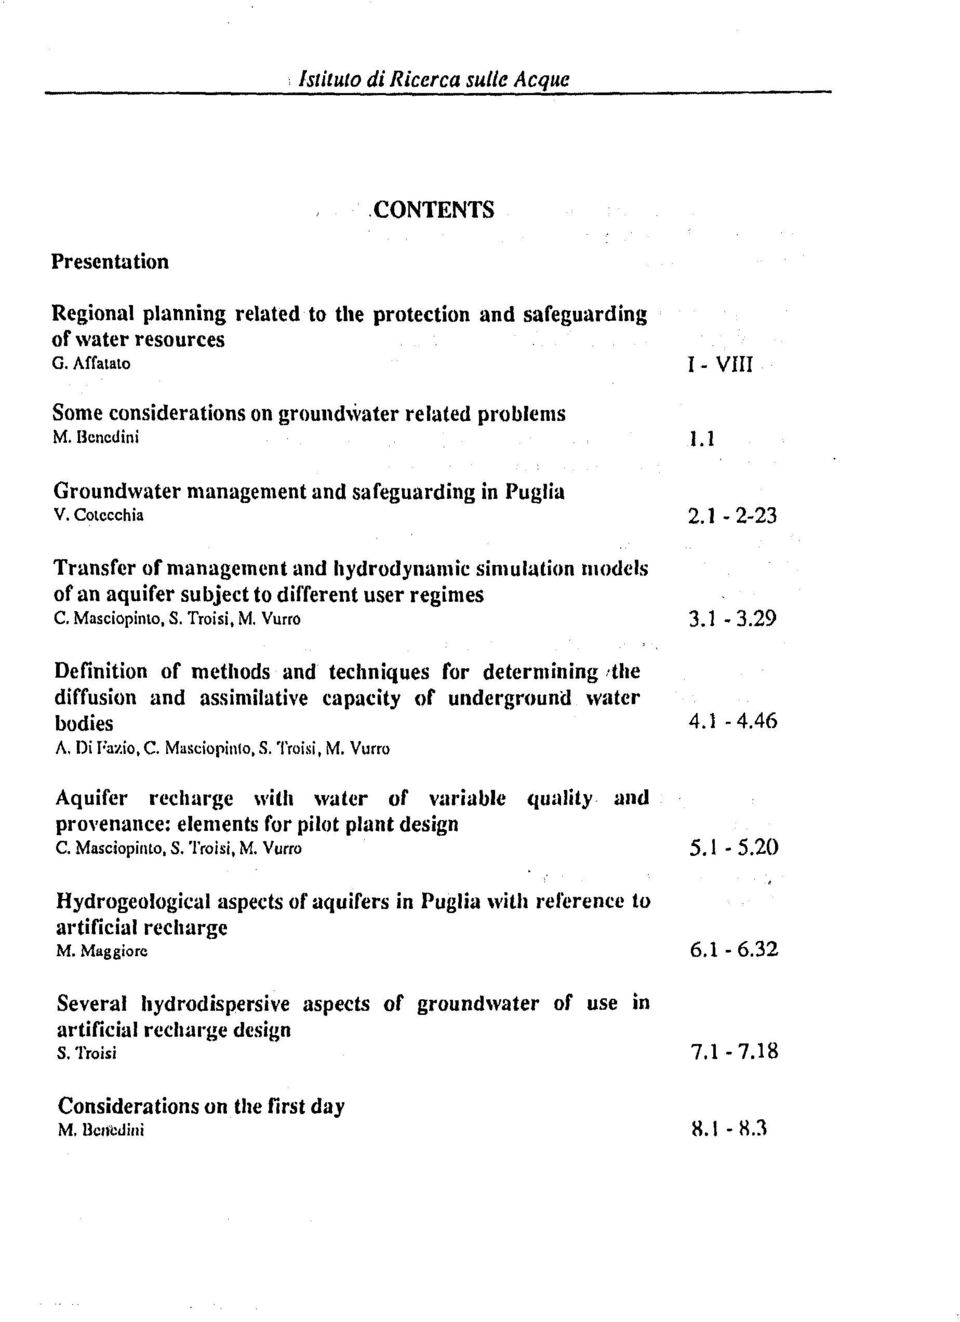 Troisi, M. Vurro 3.1 3.29 Definition of methods and techniques for determining the diffusion and assimilative capacity of underground water bodies 4.14.46 A, Di Fazio, C. Masciopinio, S. Troisi, M.